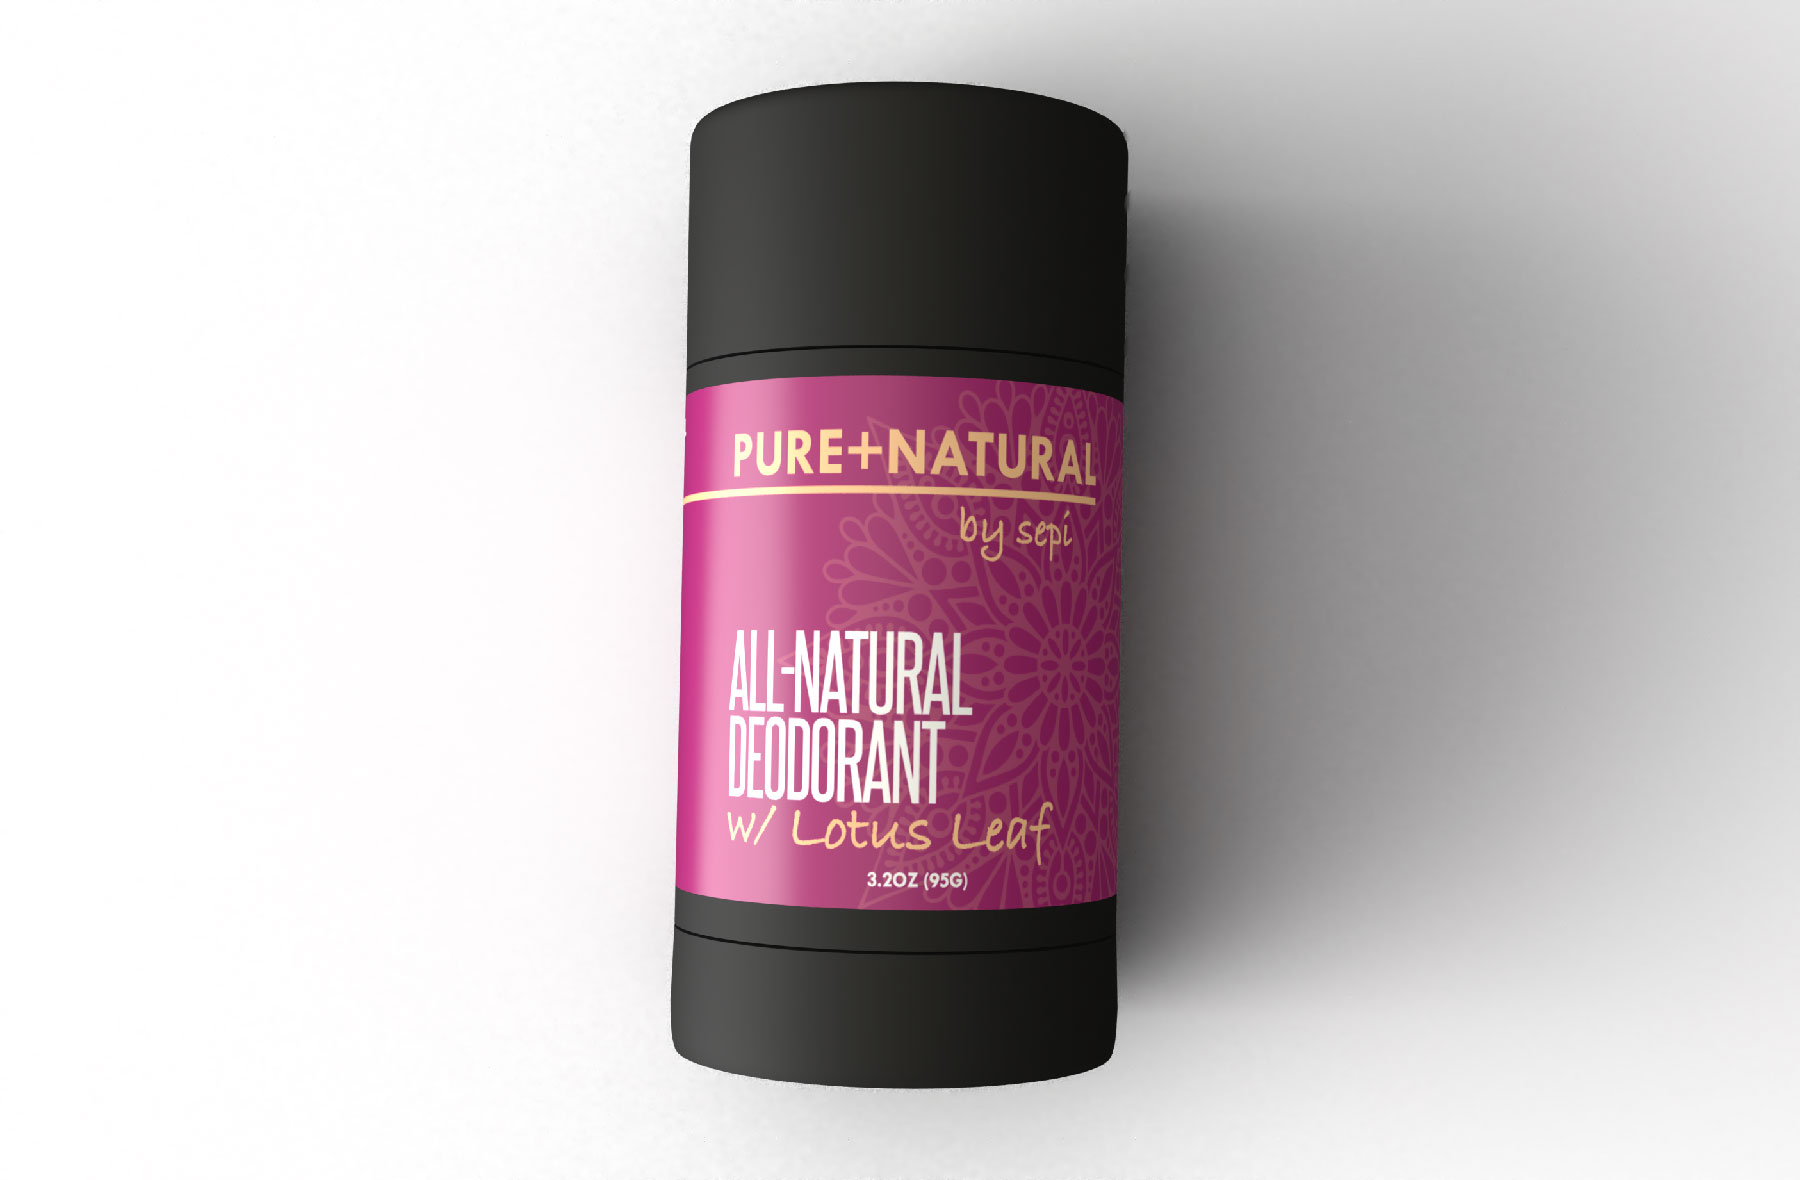 Lotus Leaf all-natural deodorant